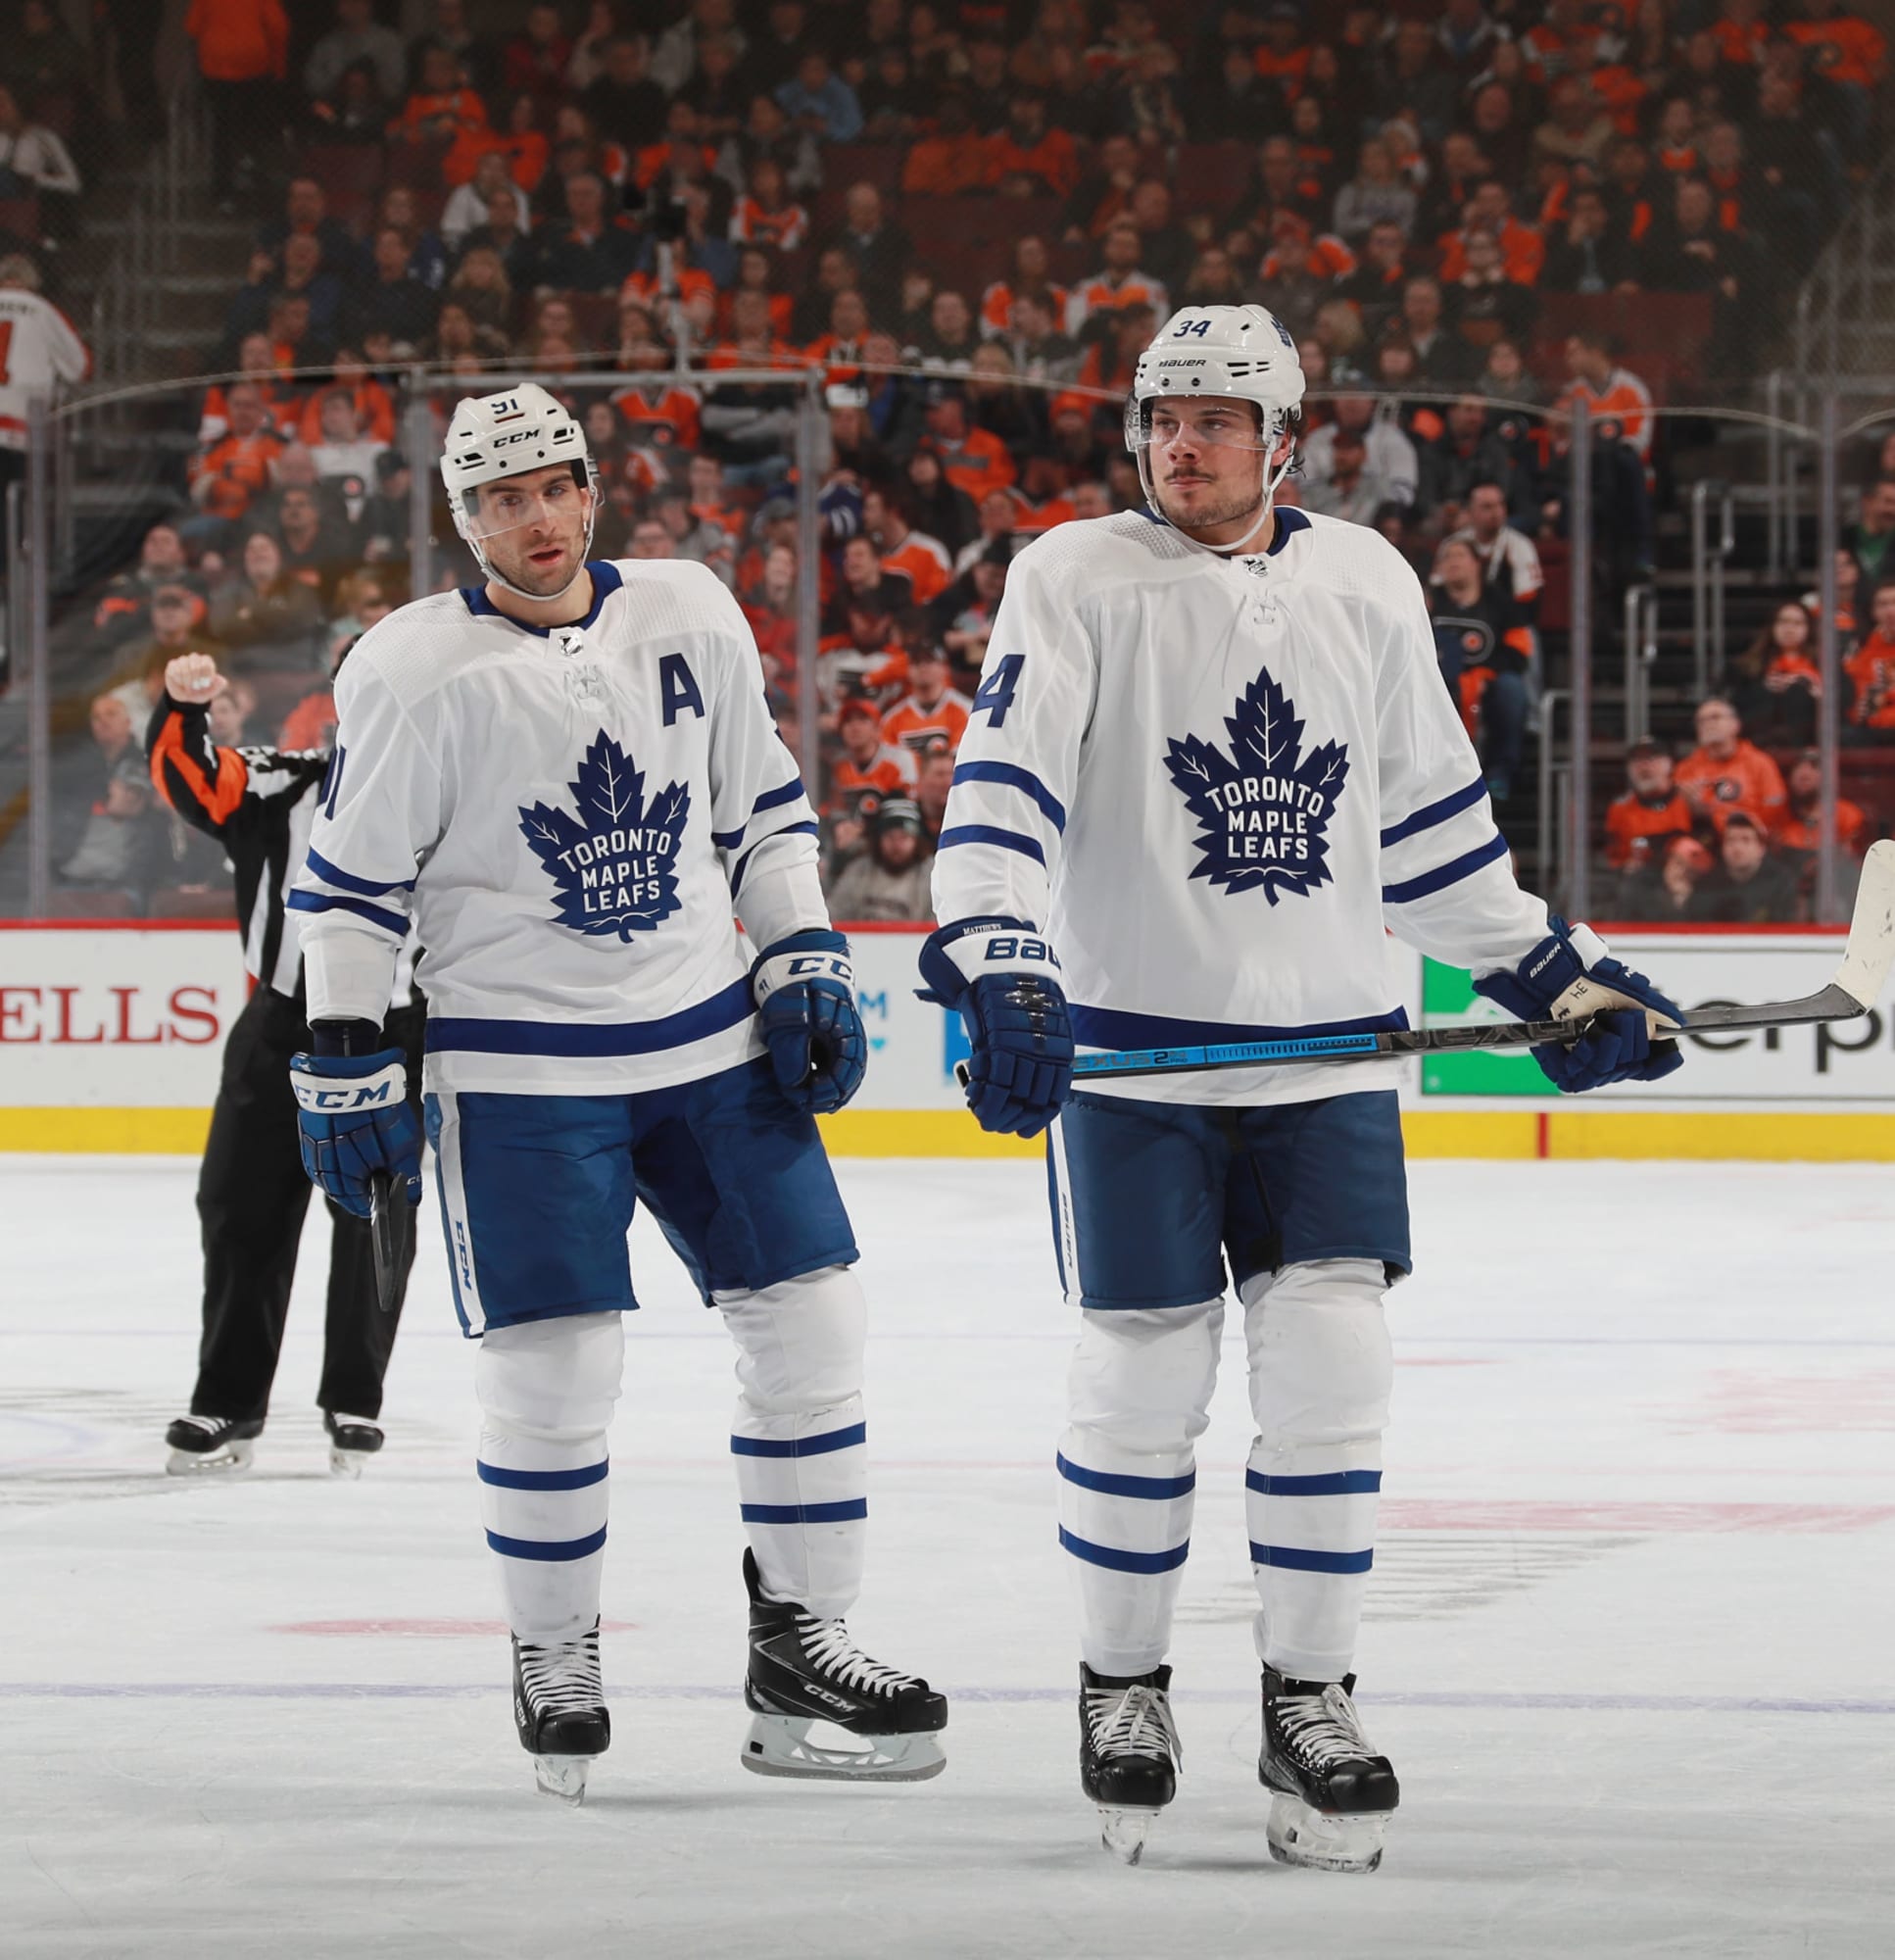 Toronto Raptors X Maple Leafs Hockey Jersey MATTHEWS/SUNDIN/NO NAME